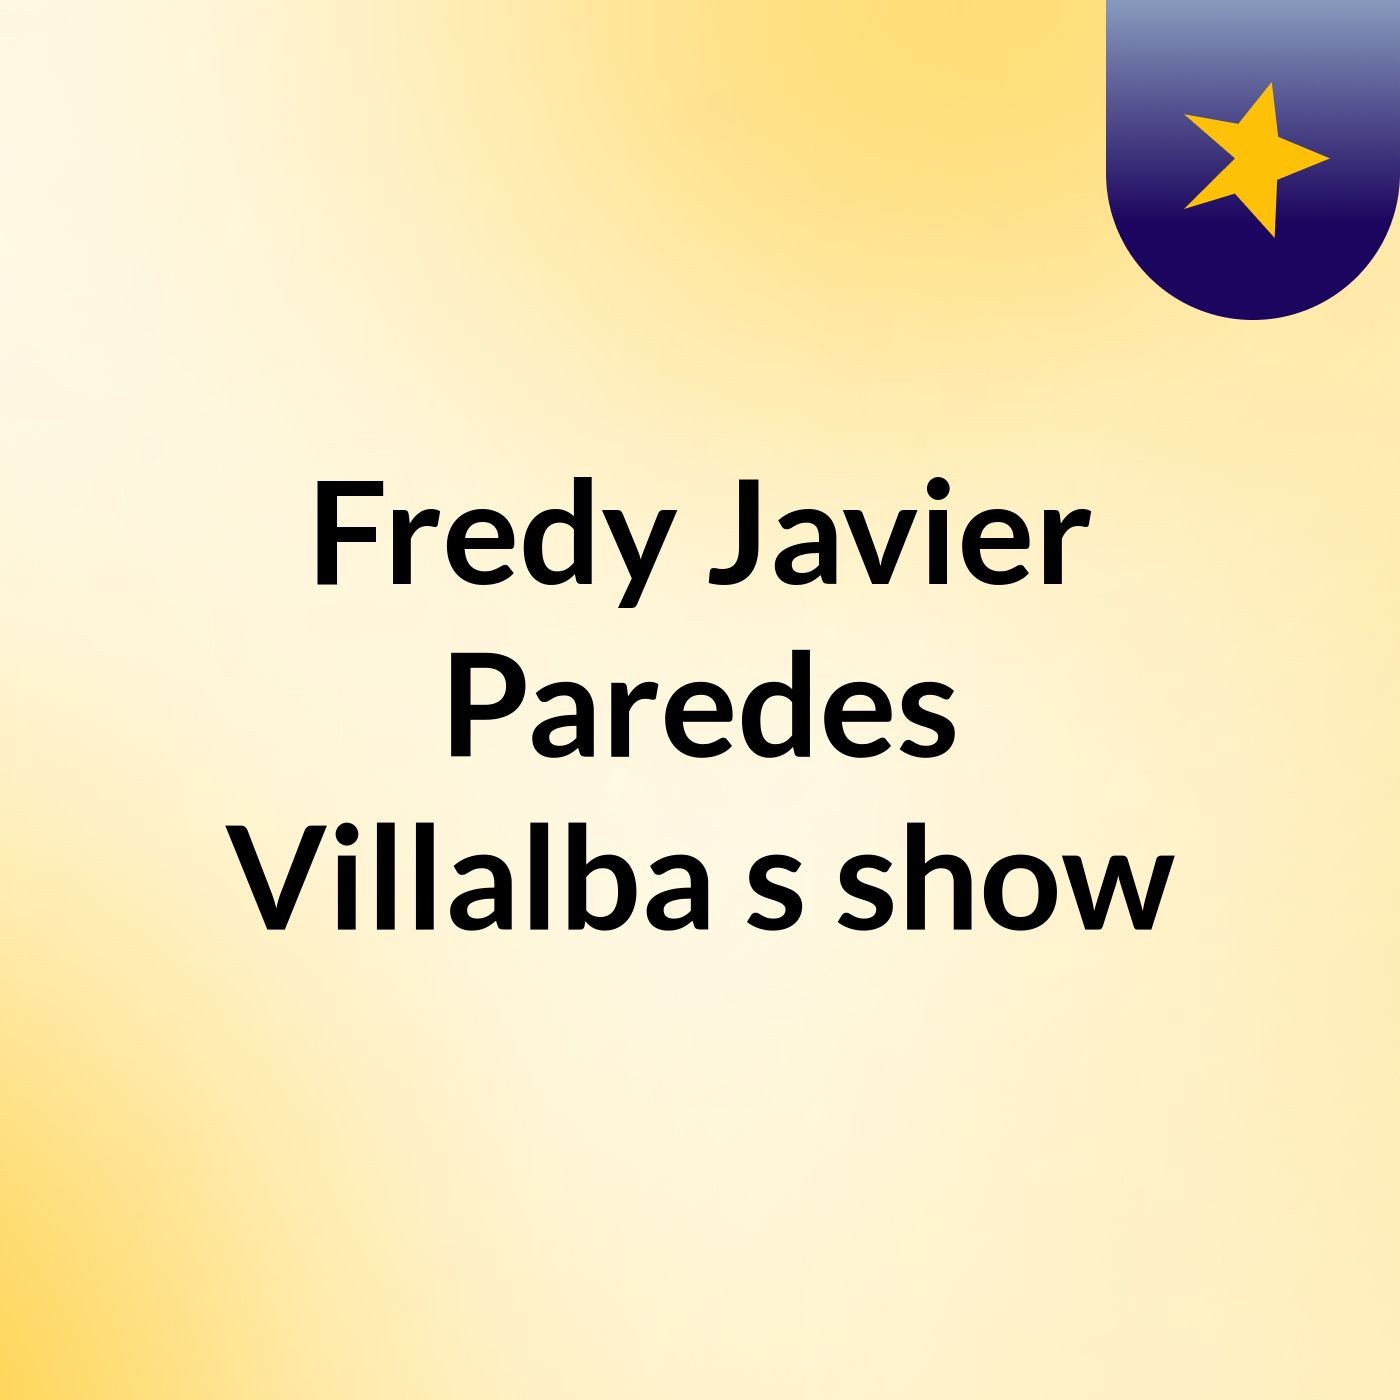 Fredy Javier Paredes Villalba's show